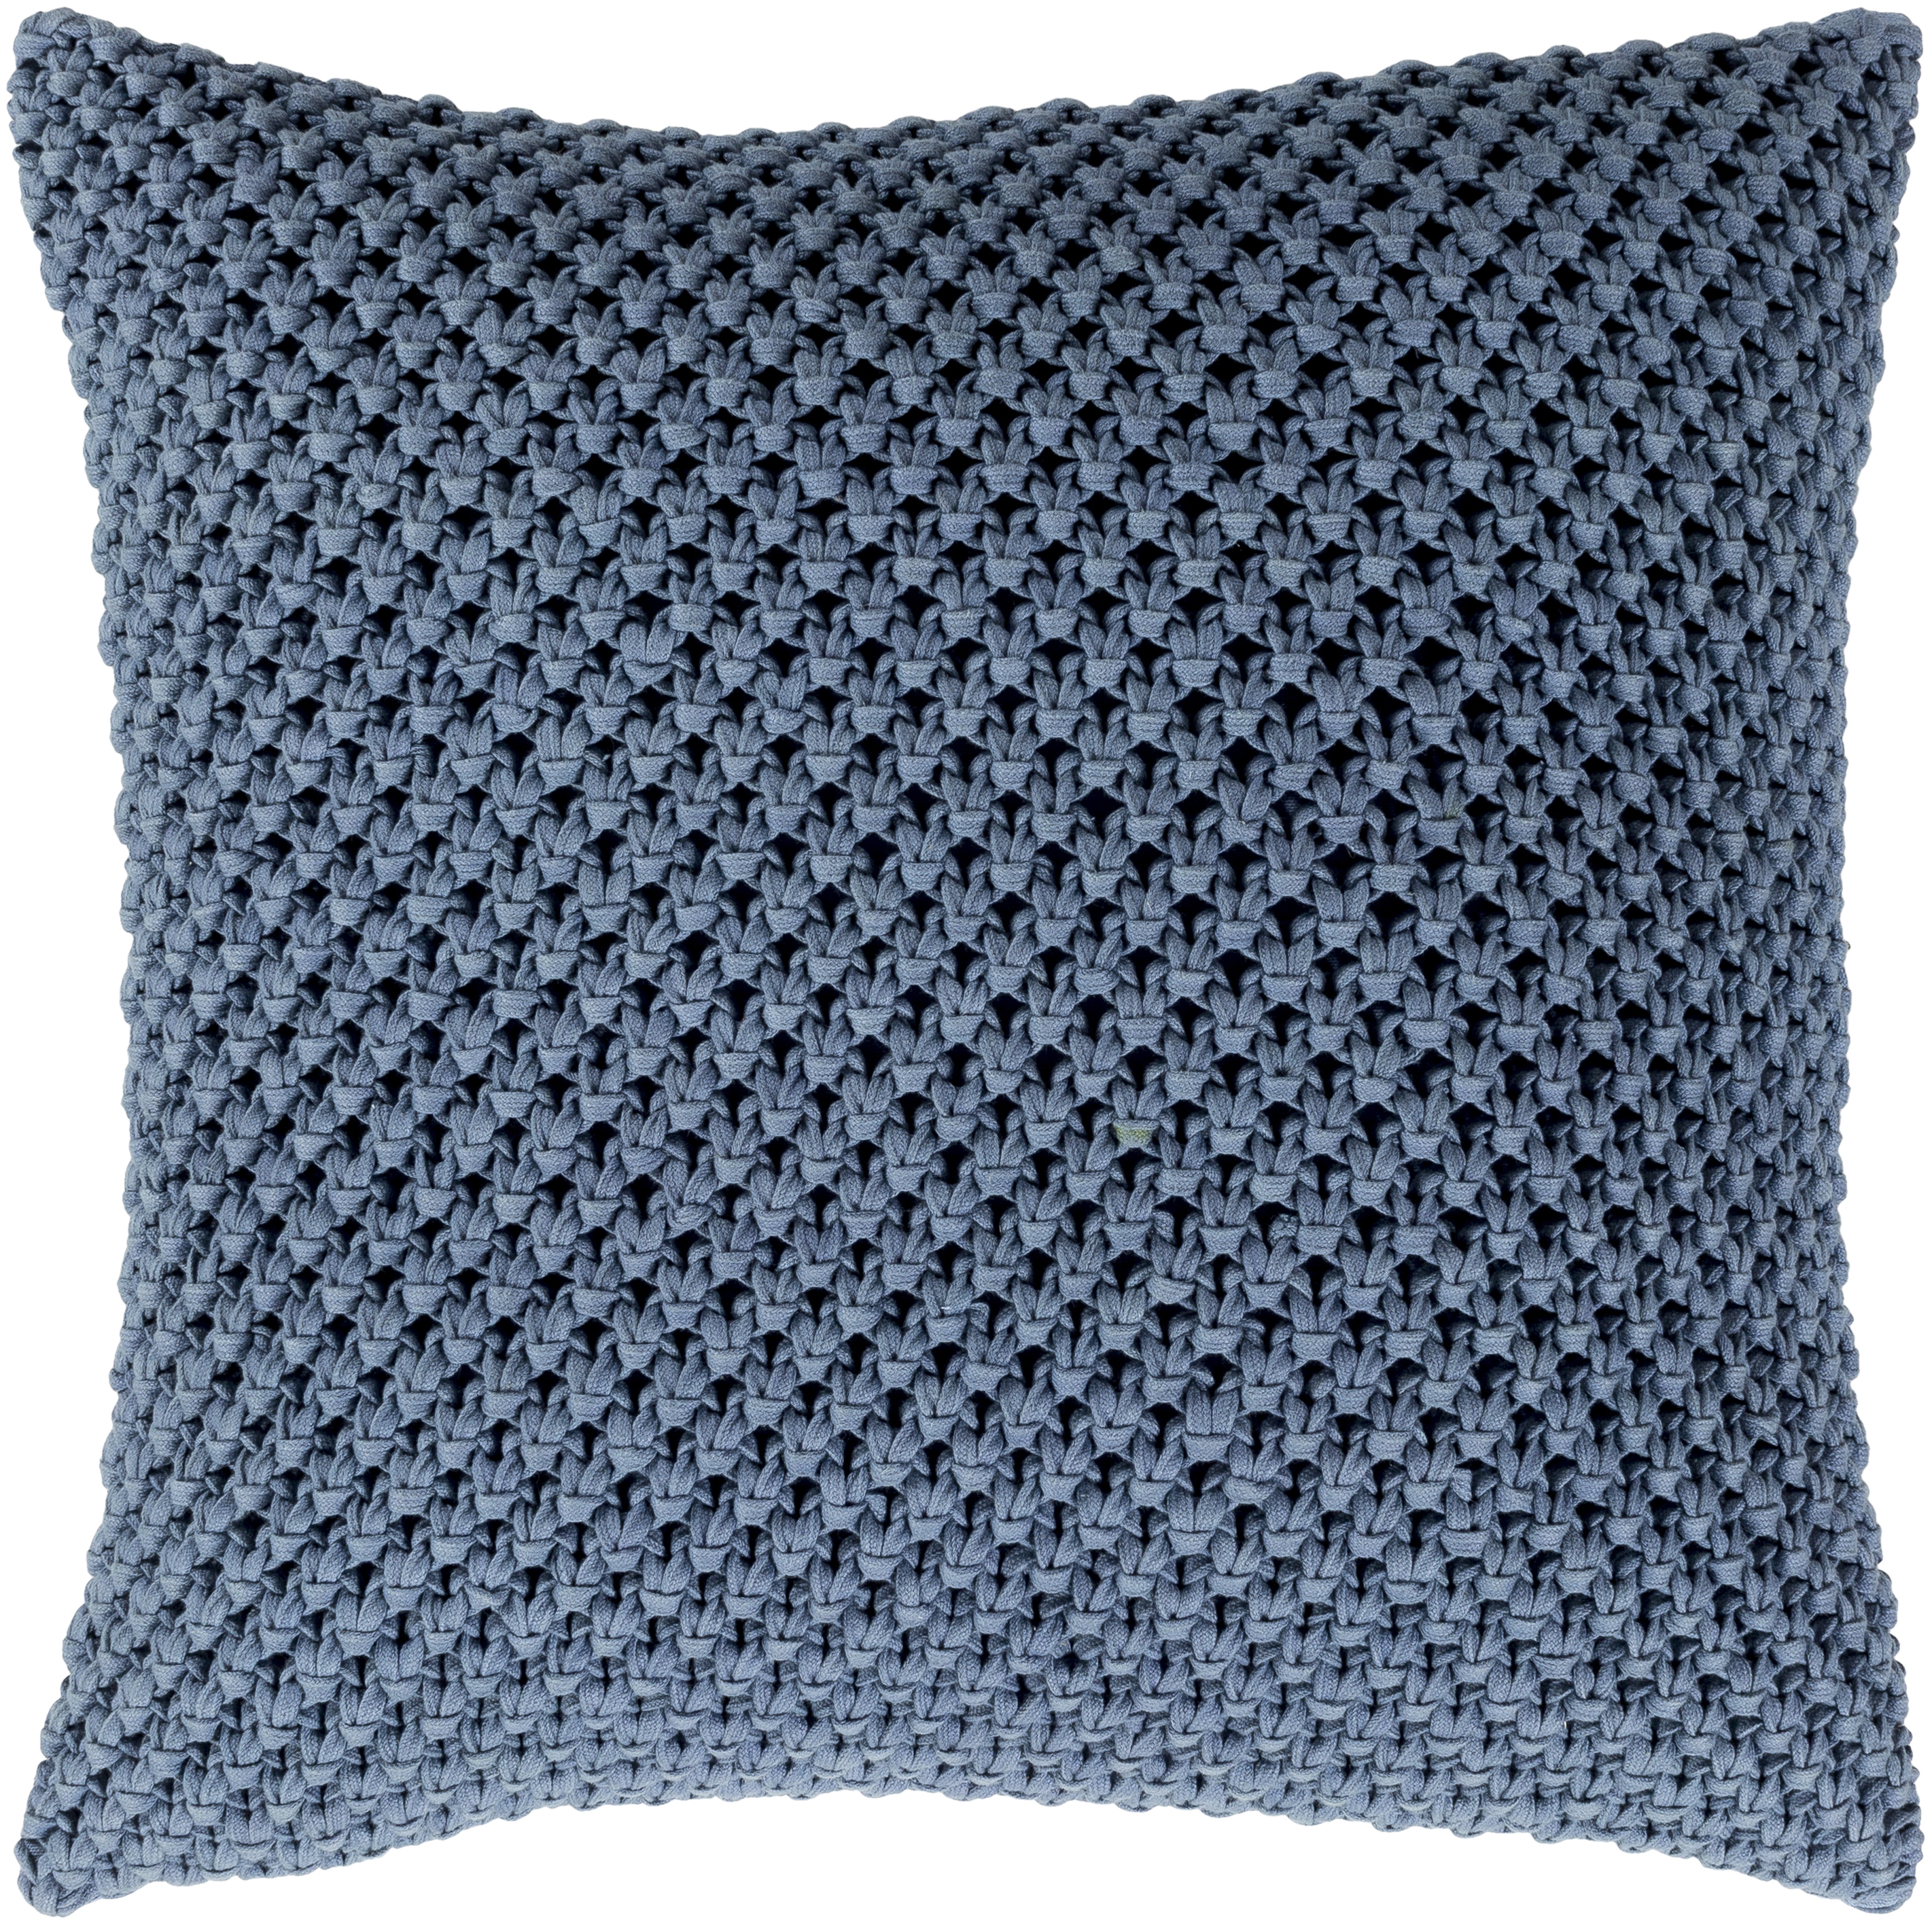 Godavari Throw Pillow, 18" x 18", pillow cover only - Image 0